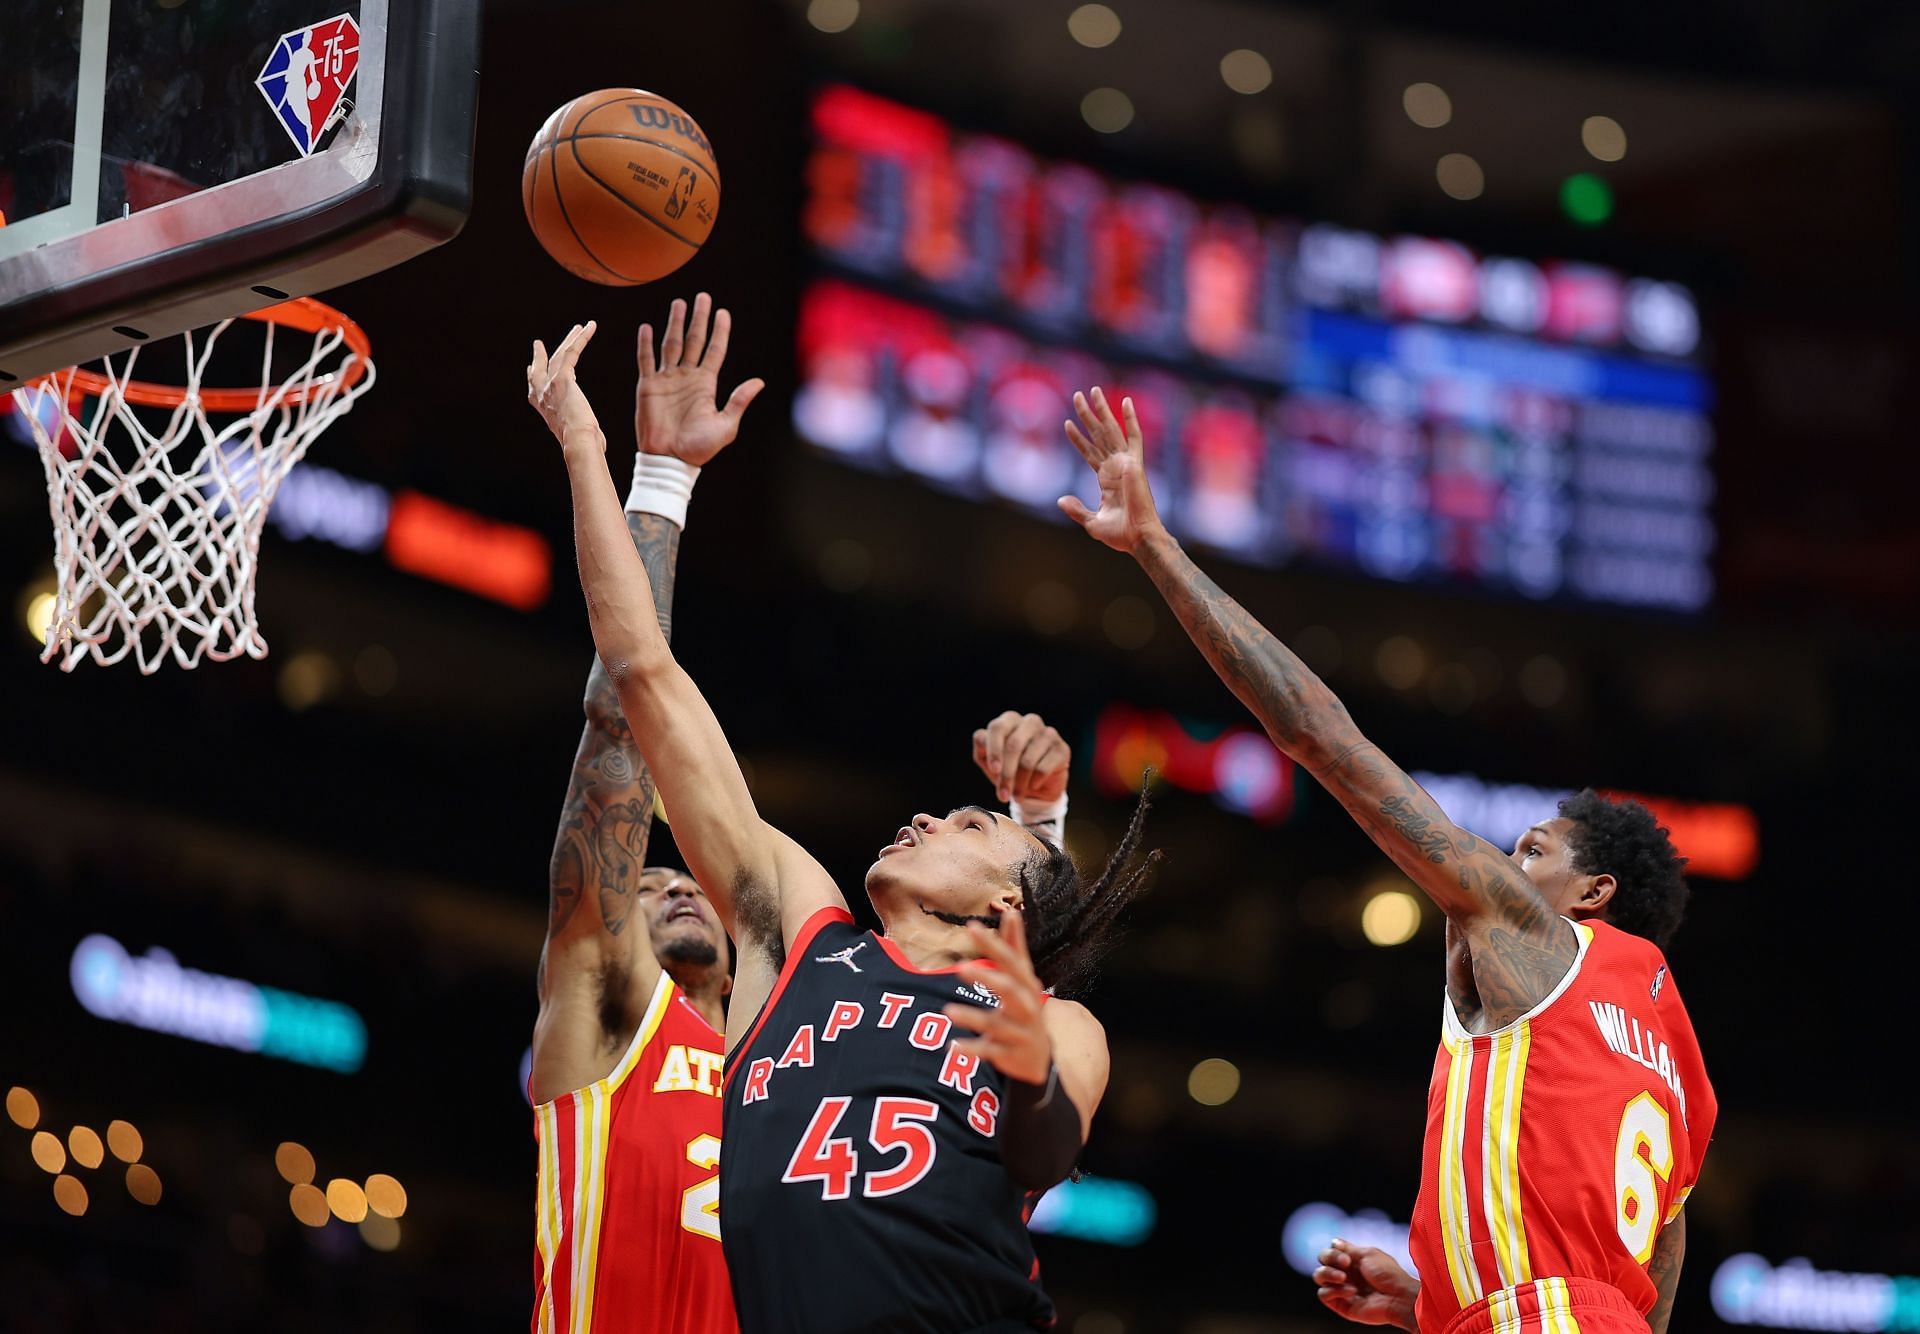 The Toronto Raptors will host the Atlanta Hawks on February 4.